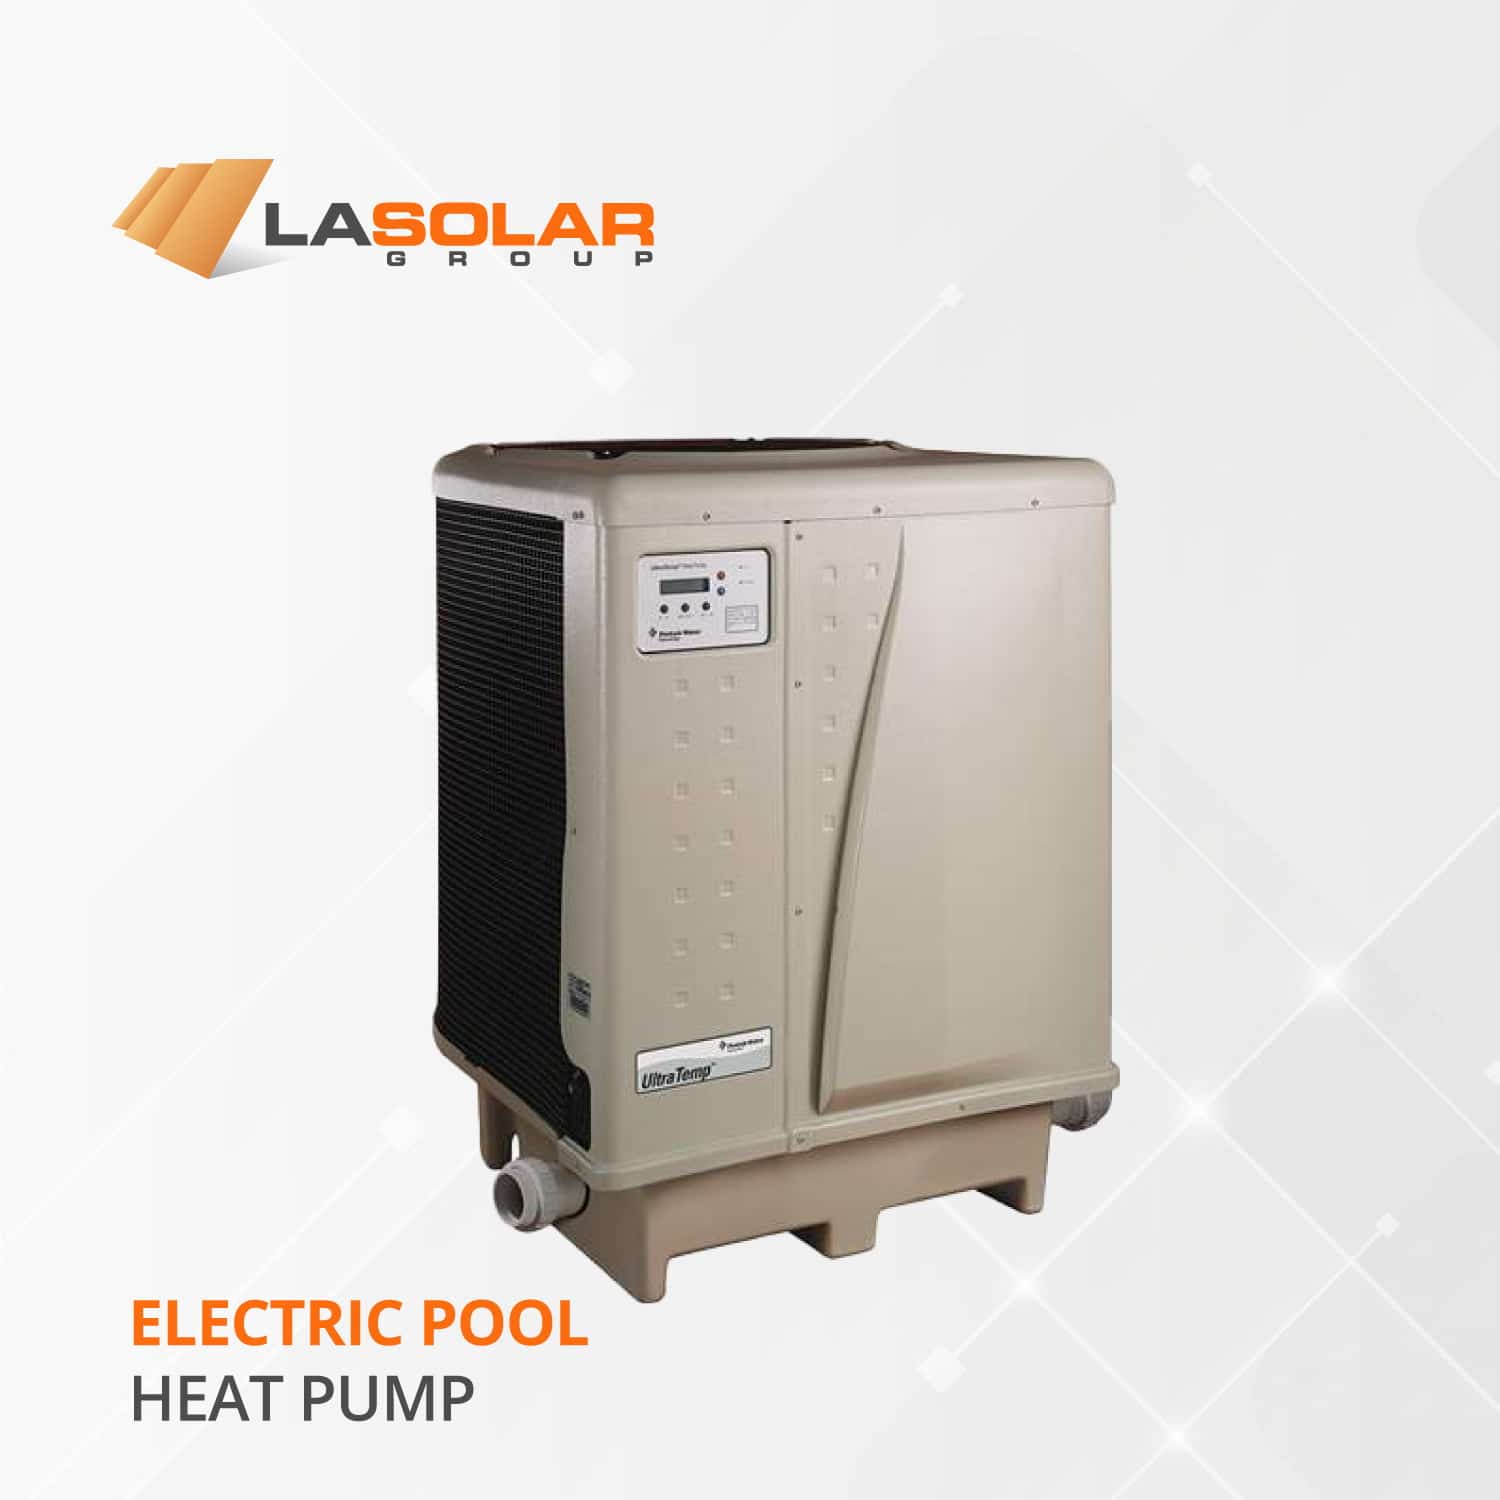 Find-Electric-Pool-Heat-Pump-In-La